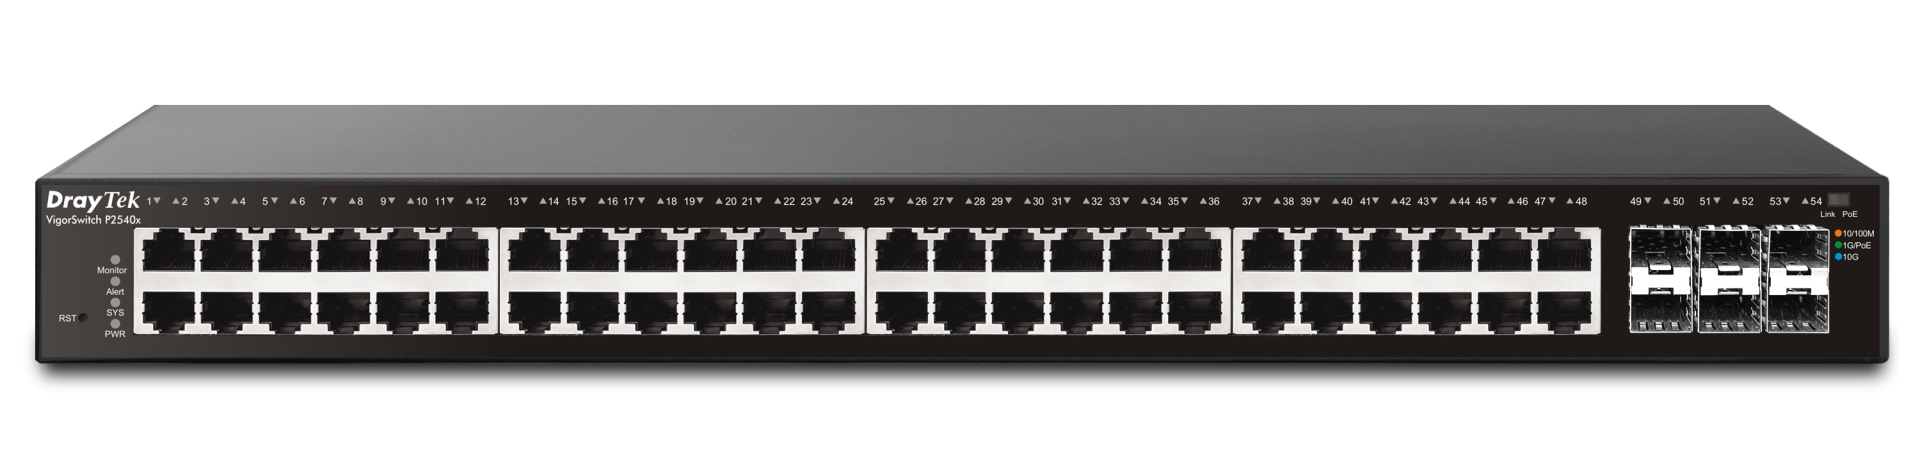 DrayTek VSP2540XS-K 54-port PoE+ Gigabit L2+ Managed Switch